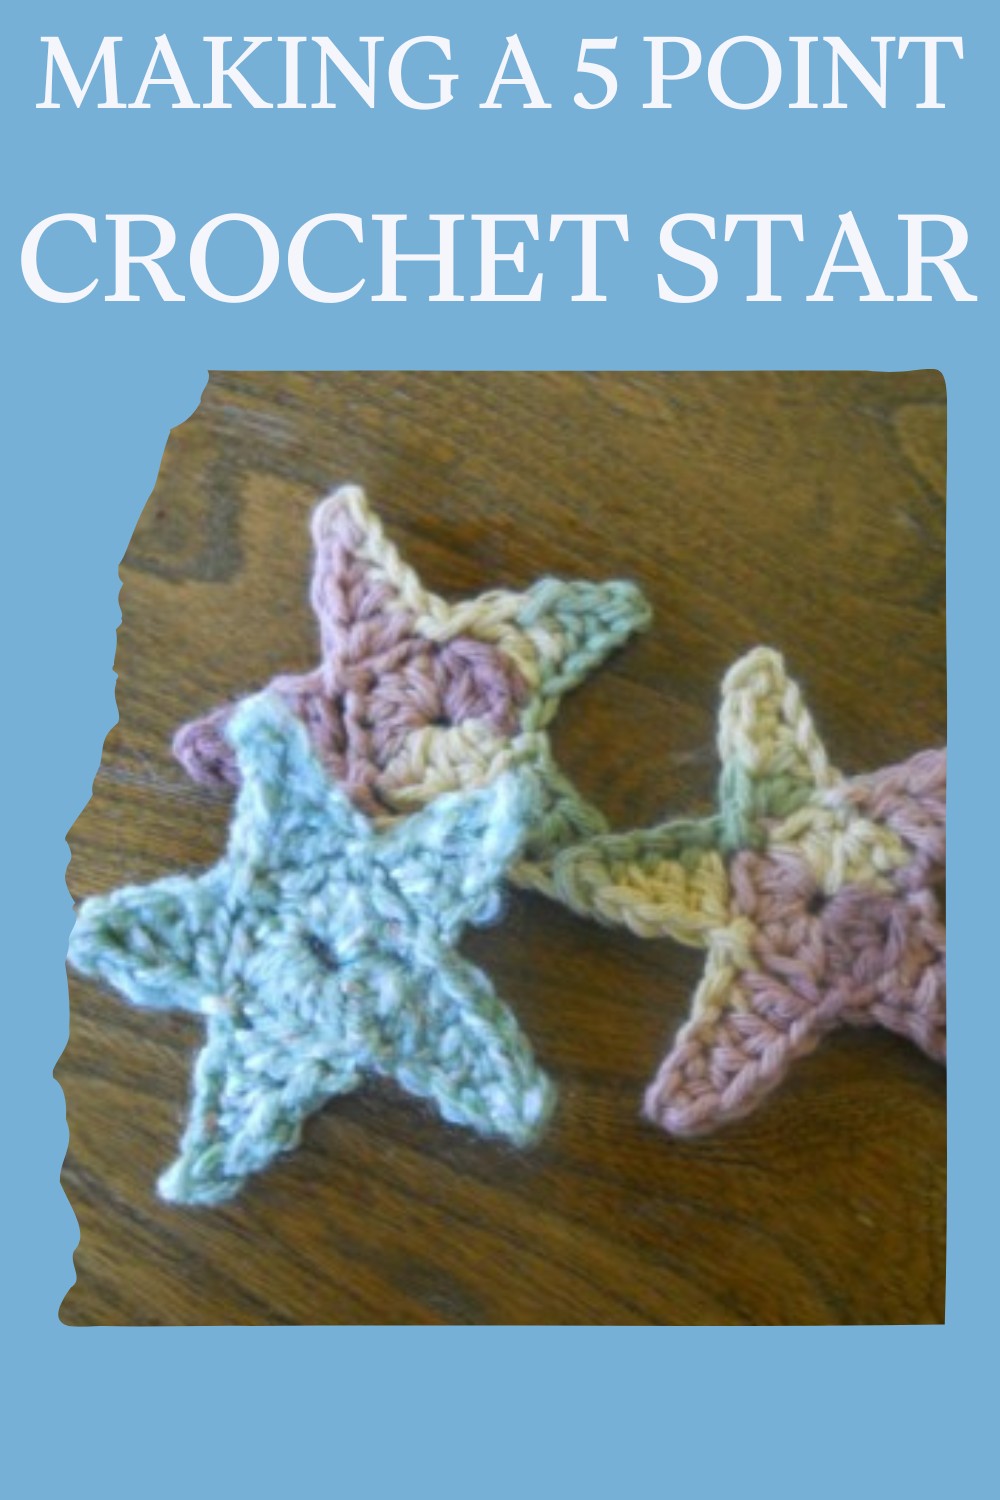 Making A 5 Point Crochet Star Pattern